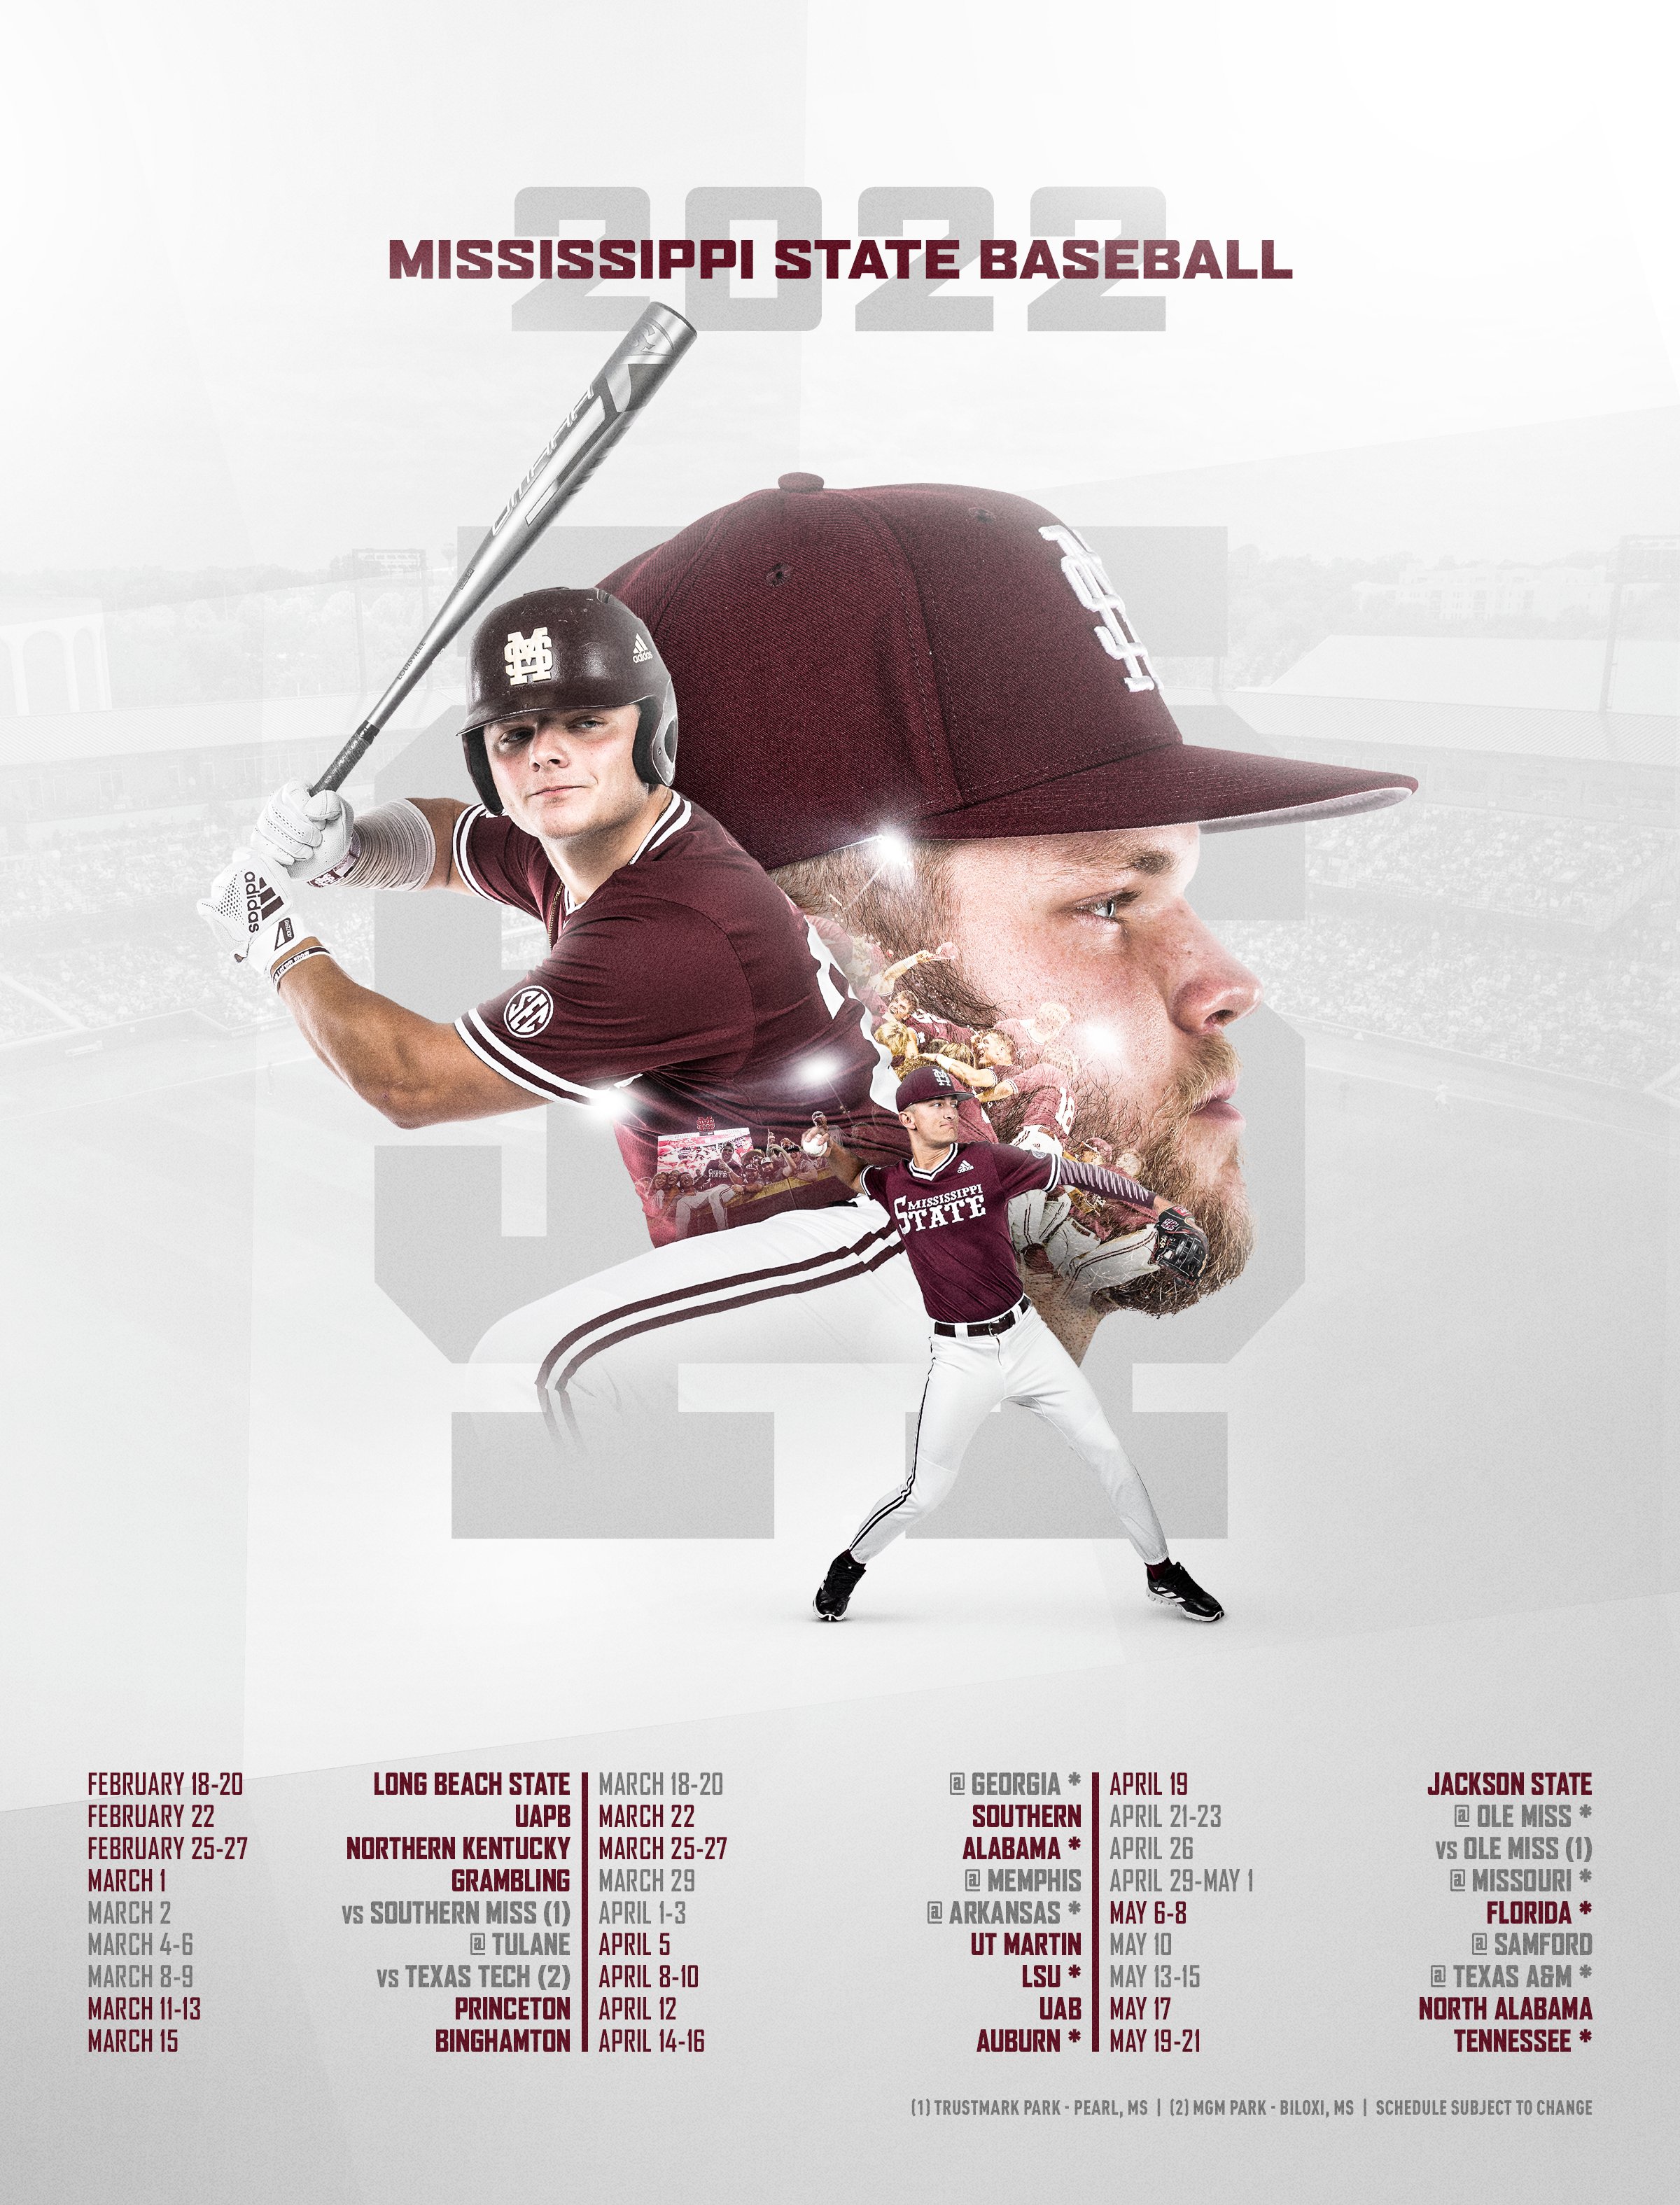 2022 MSU Baseball season schedule with images of MSU baseball players Logan Tanner, Landon Sims and Kamren James